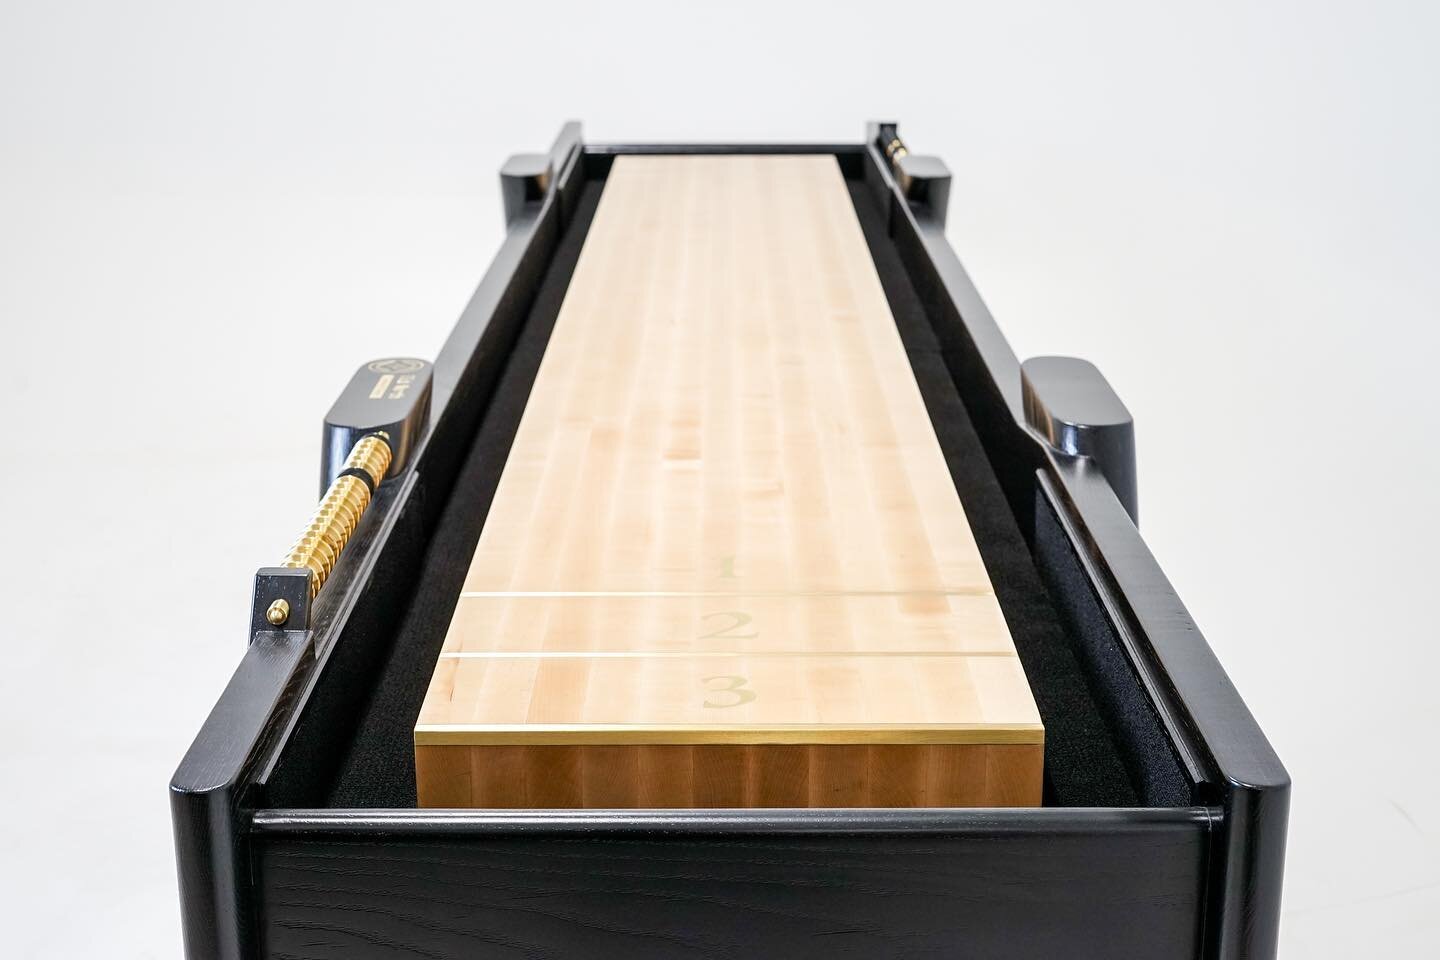 Custom shuffleboard table almost 14ft long. 
@jonathandanielclay @ablephotostudio @abletradeknox #furnituredesign #shuffleboard #marriott @makerexchangeknox